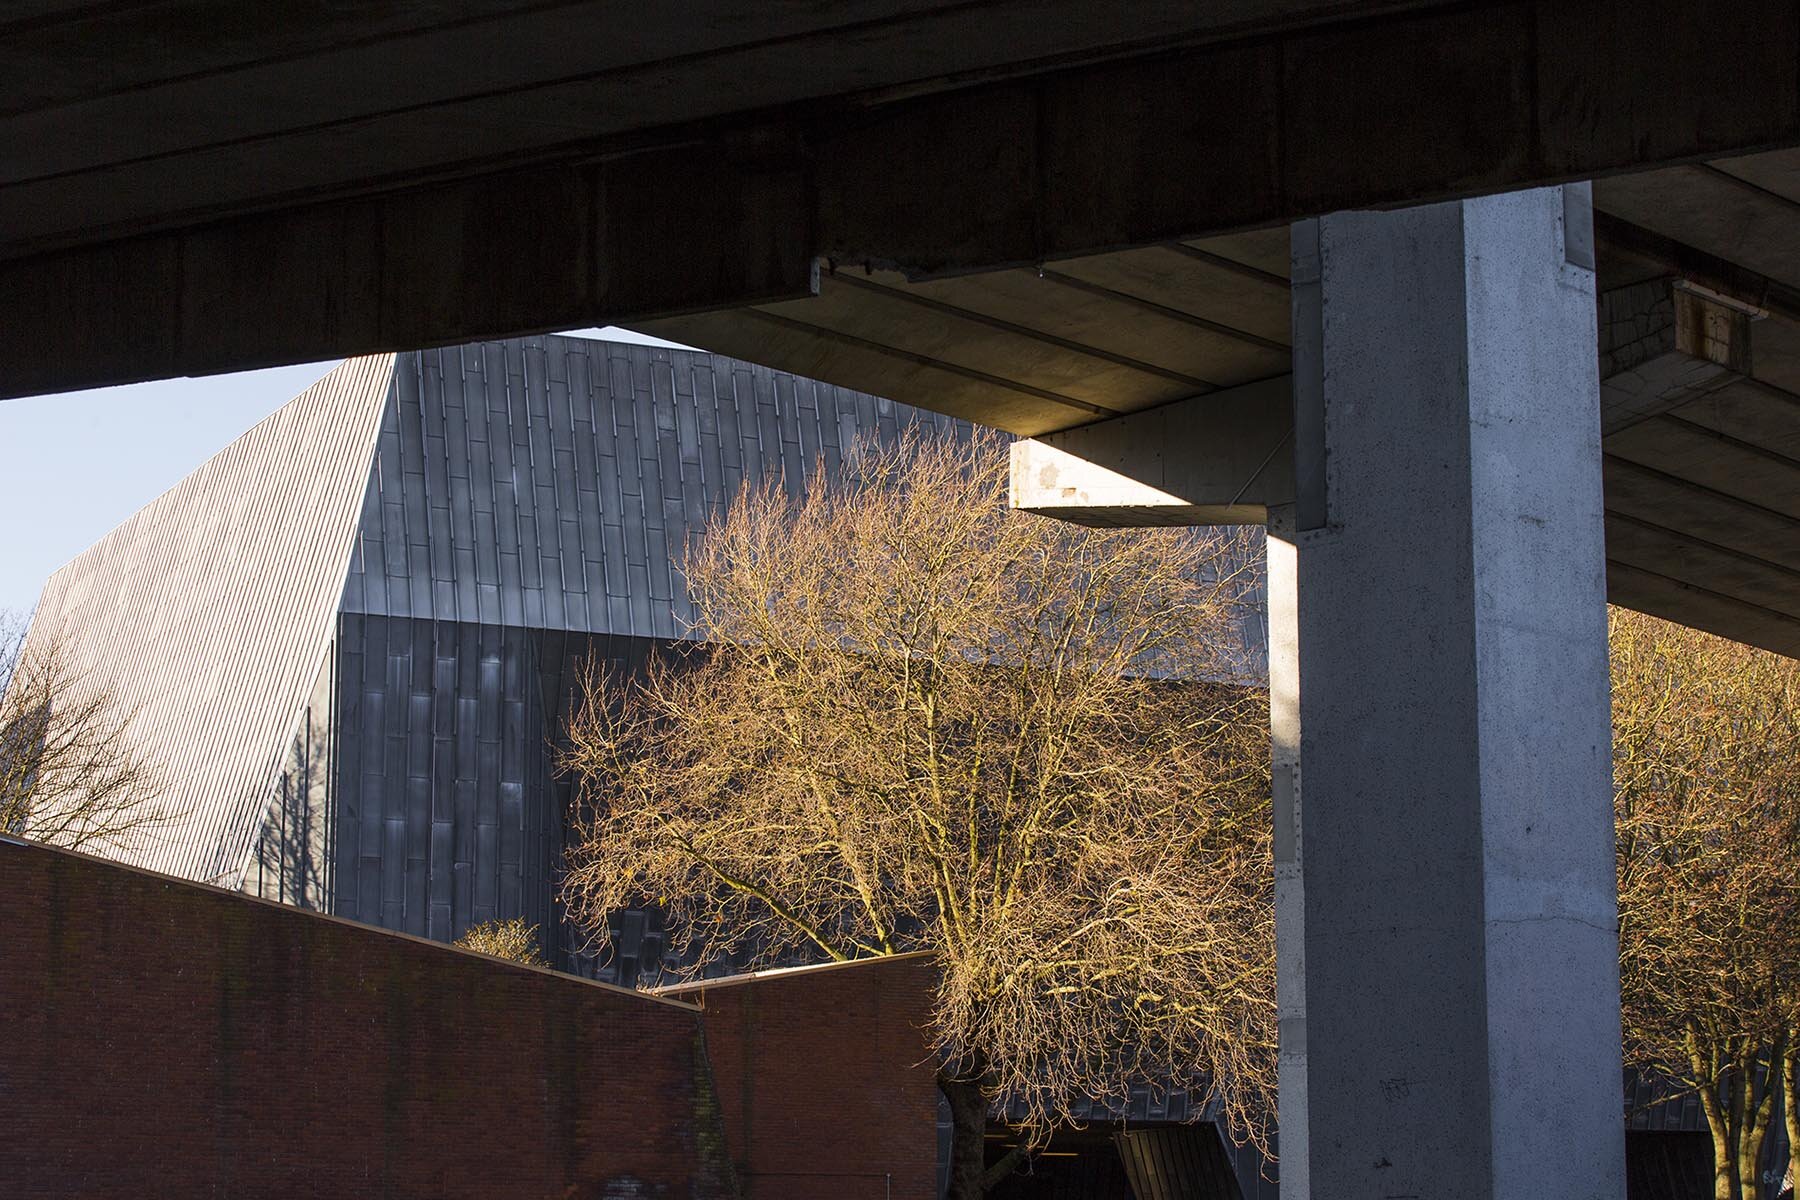  Coventry’s Brutalist architecture.  